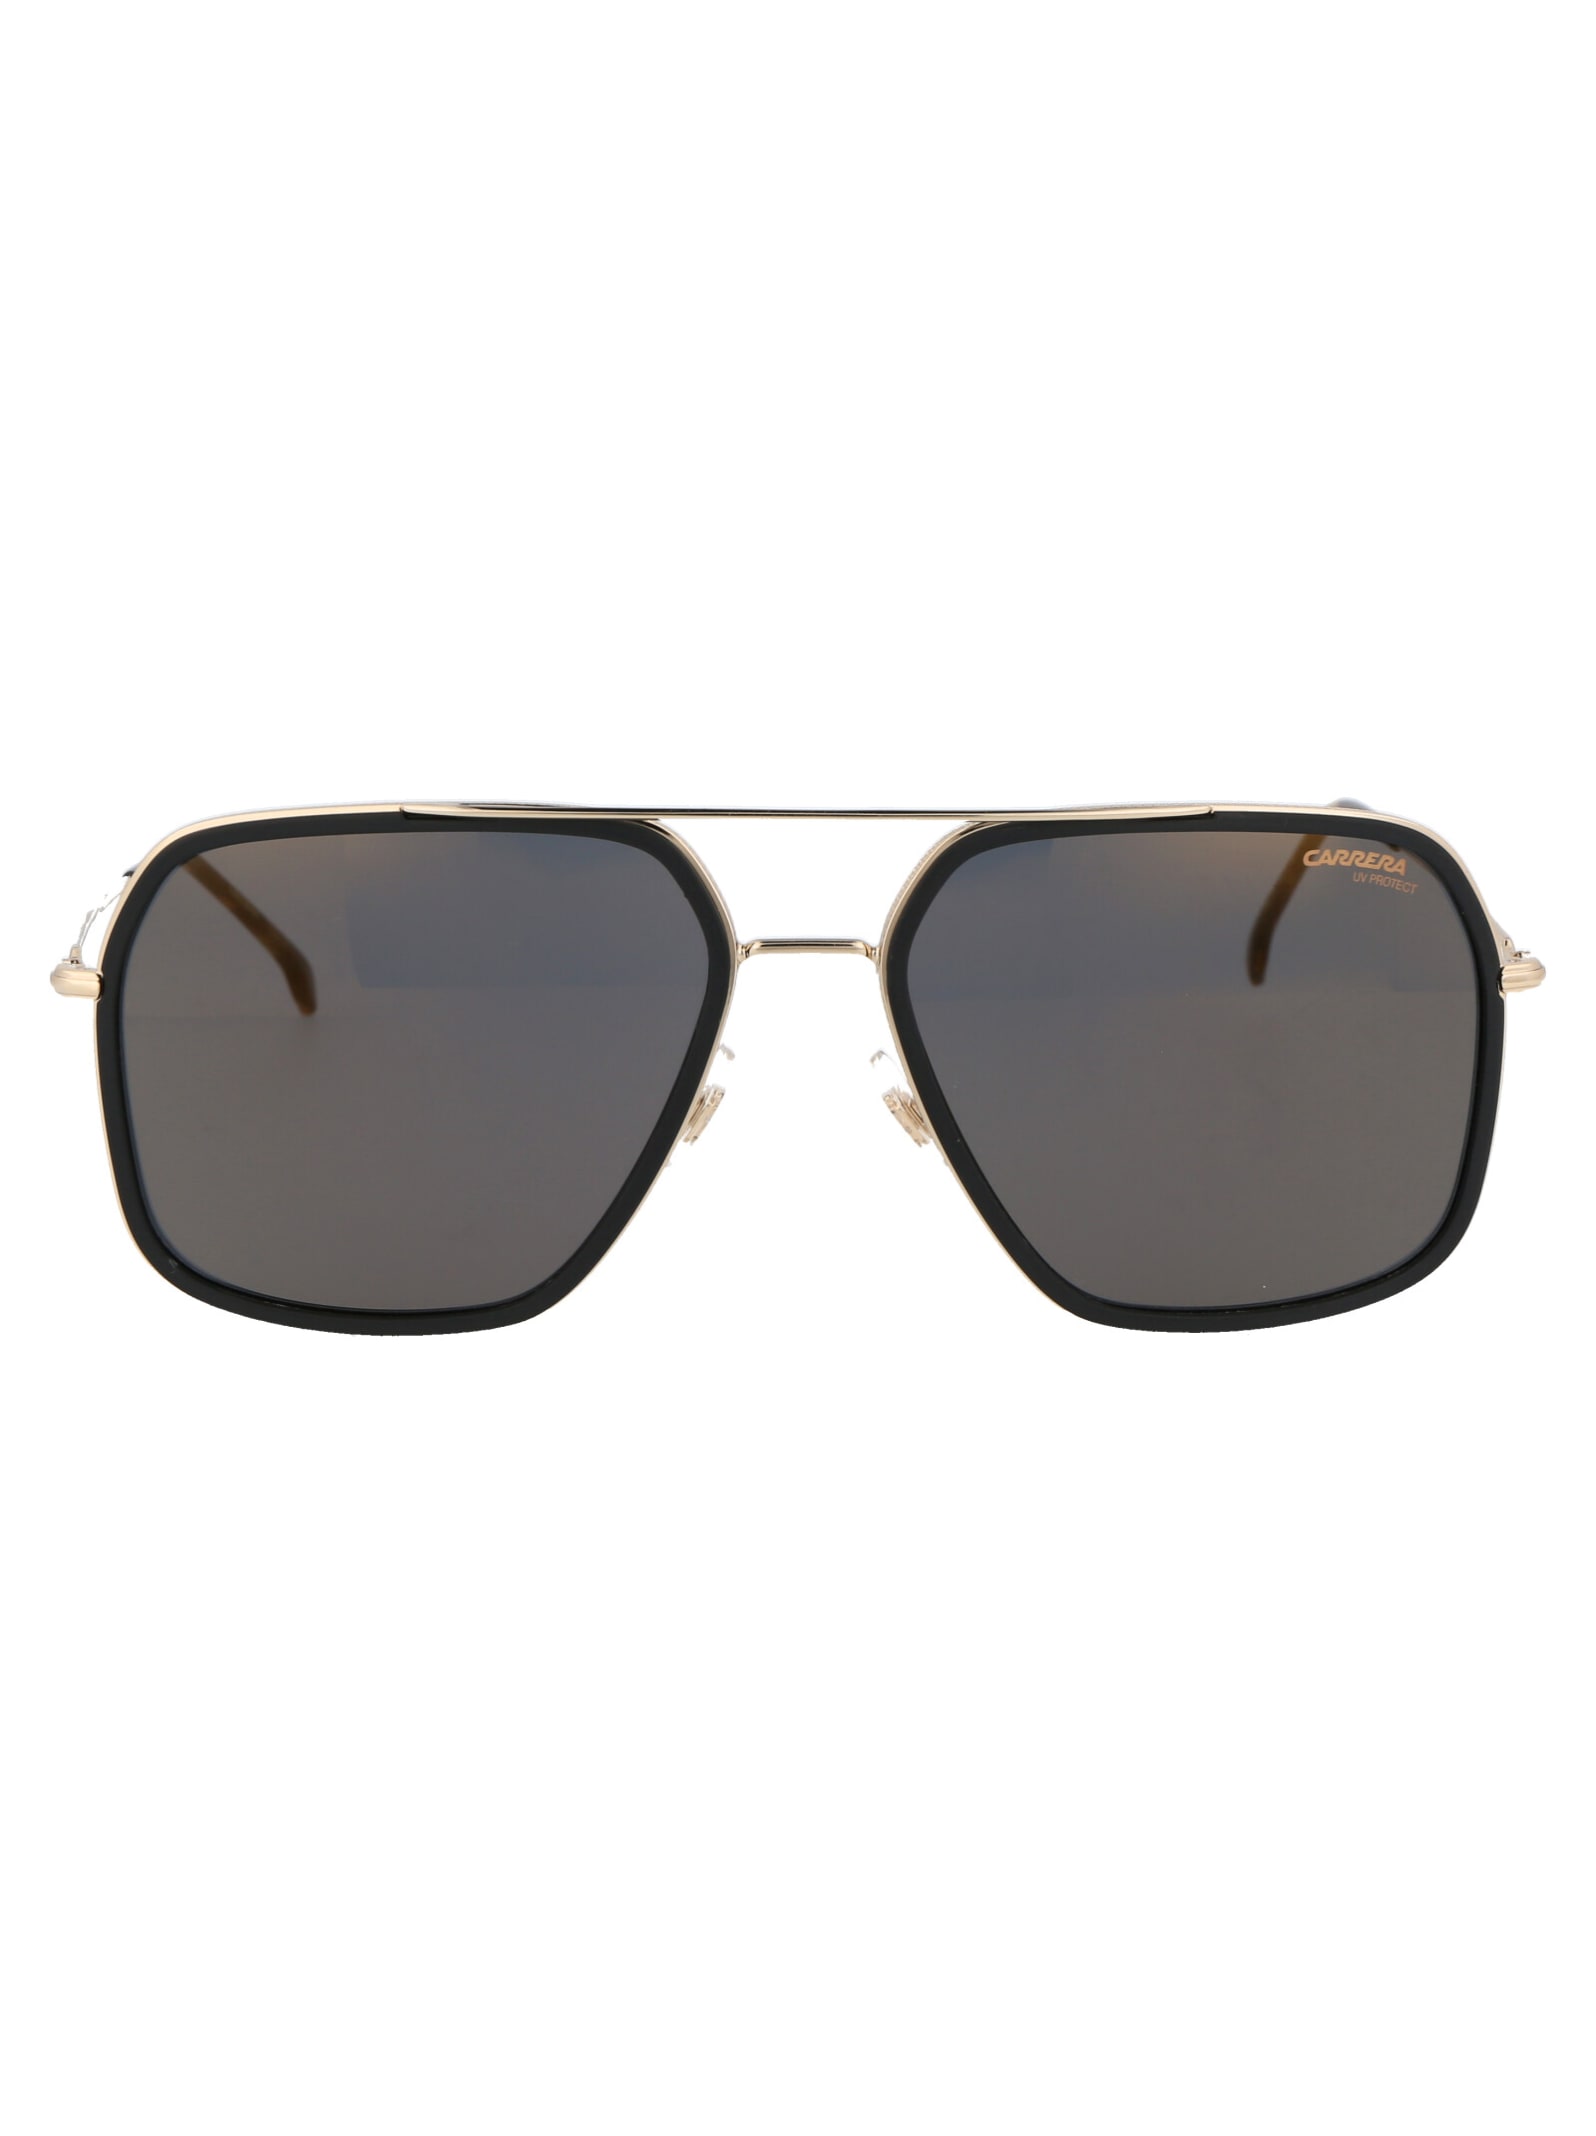 Carrera 273/s Sunglasses